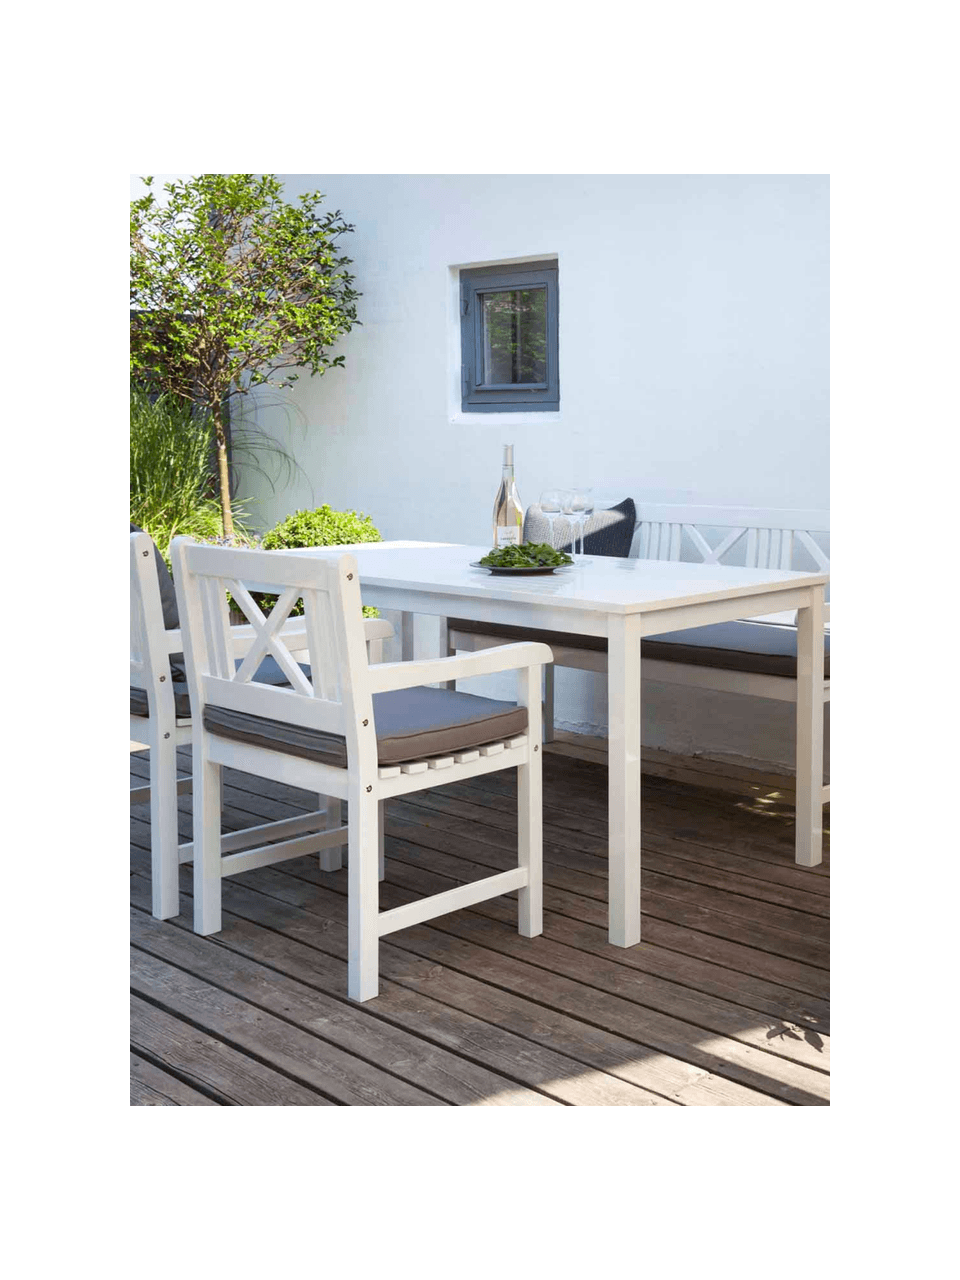 Garten-Armlehnstuhl Rosenborg aus Holz in Weiß, Mahagoniholz, lackiert, Weiß, B 59 x H 89 cm